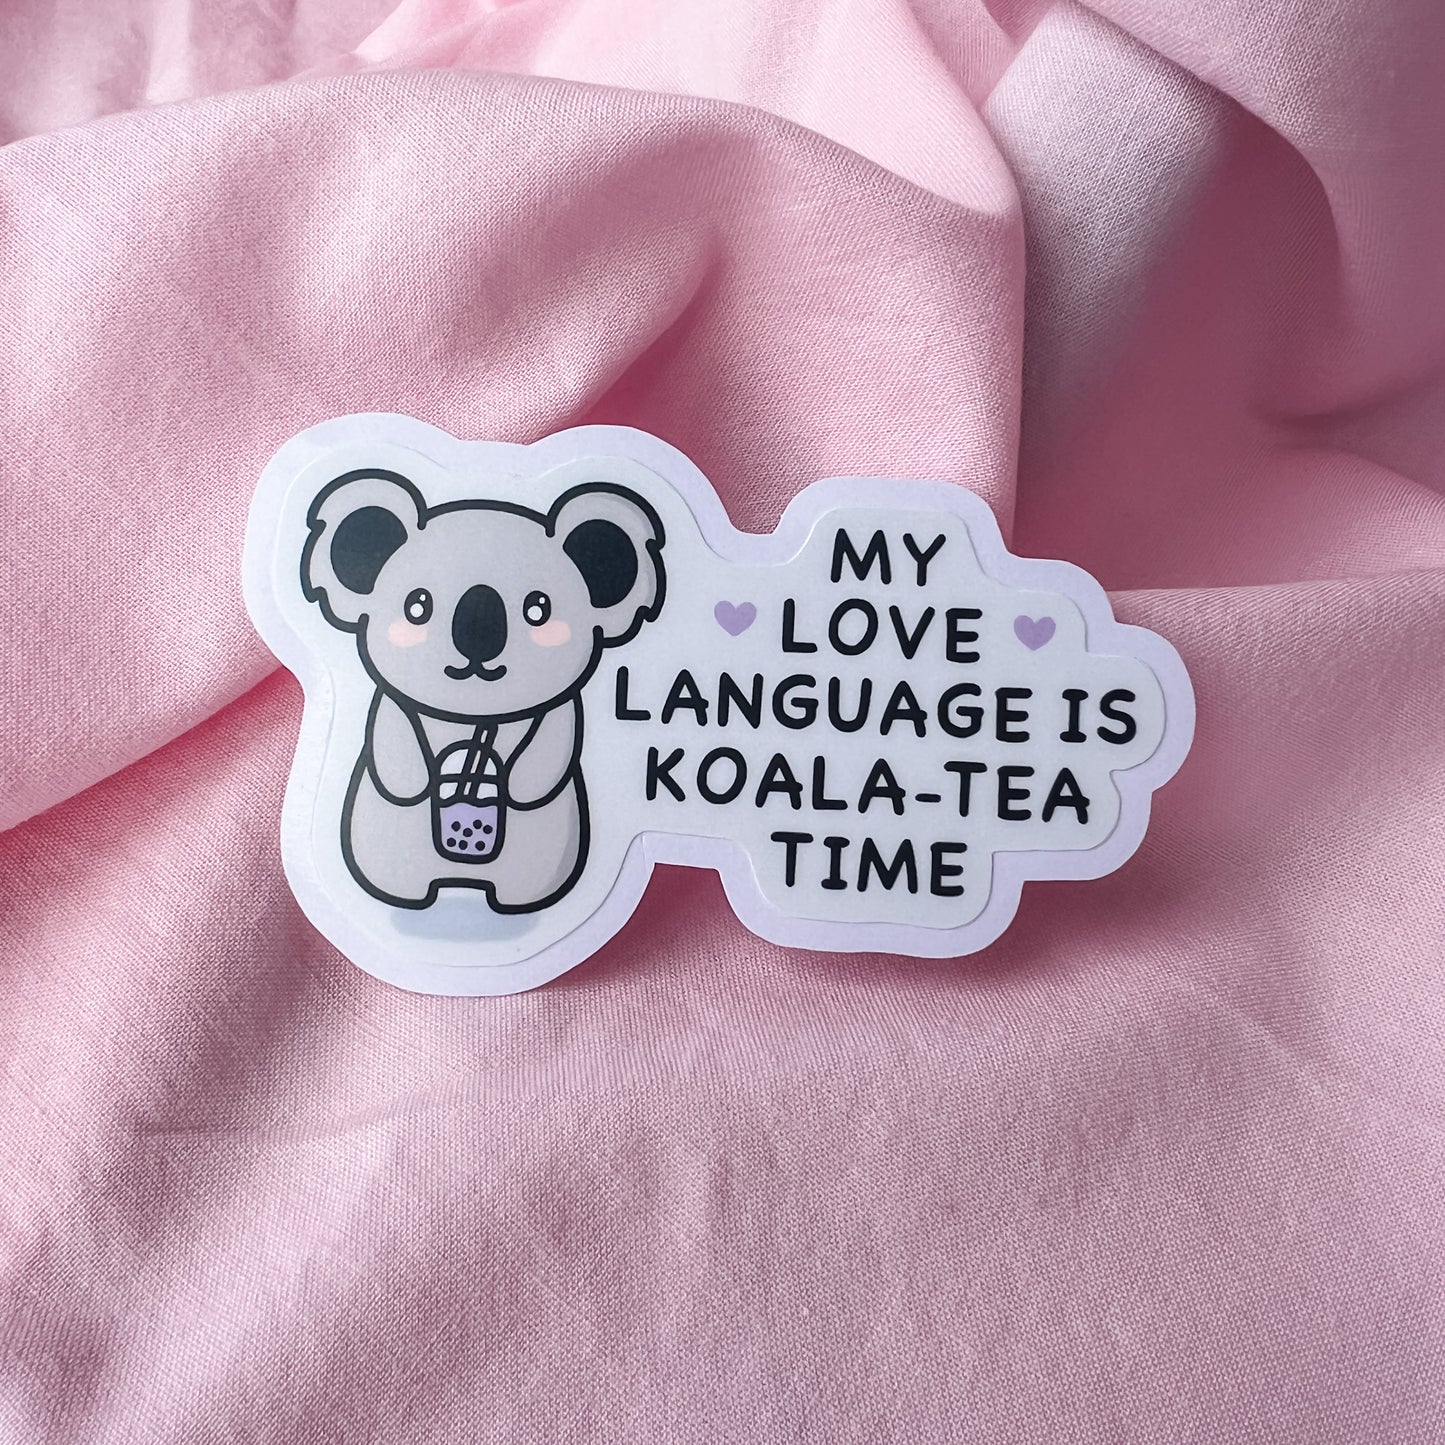 Koala-Tea Time Sticker